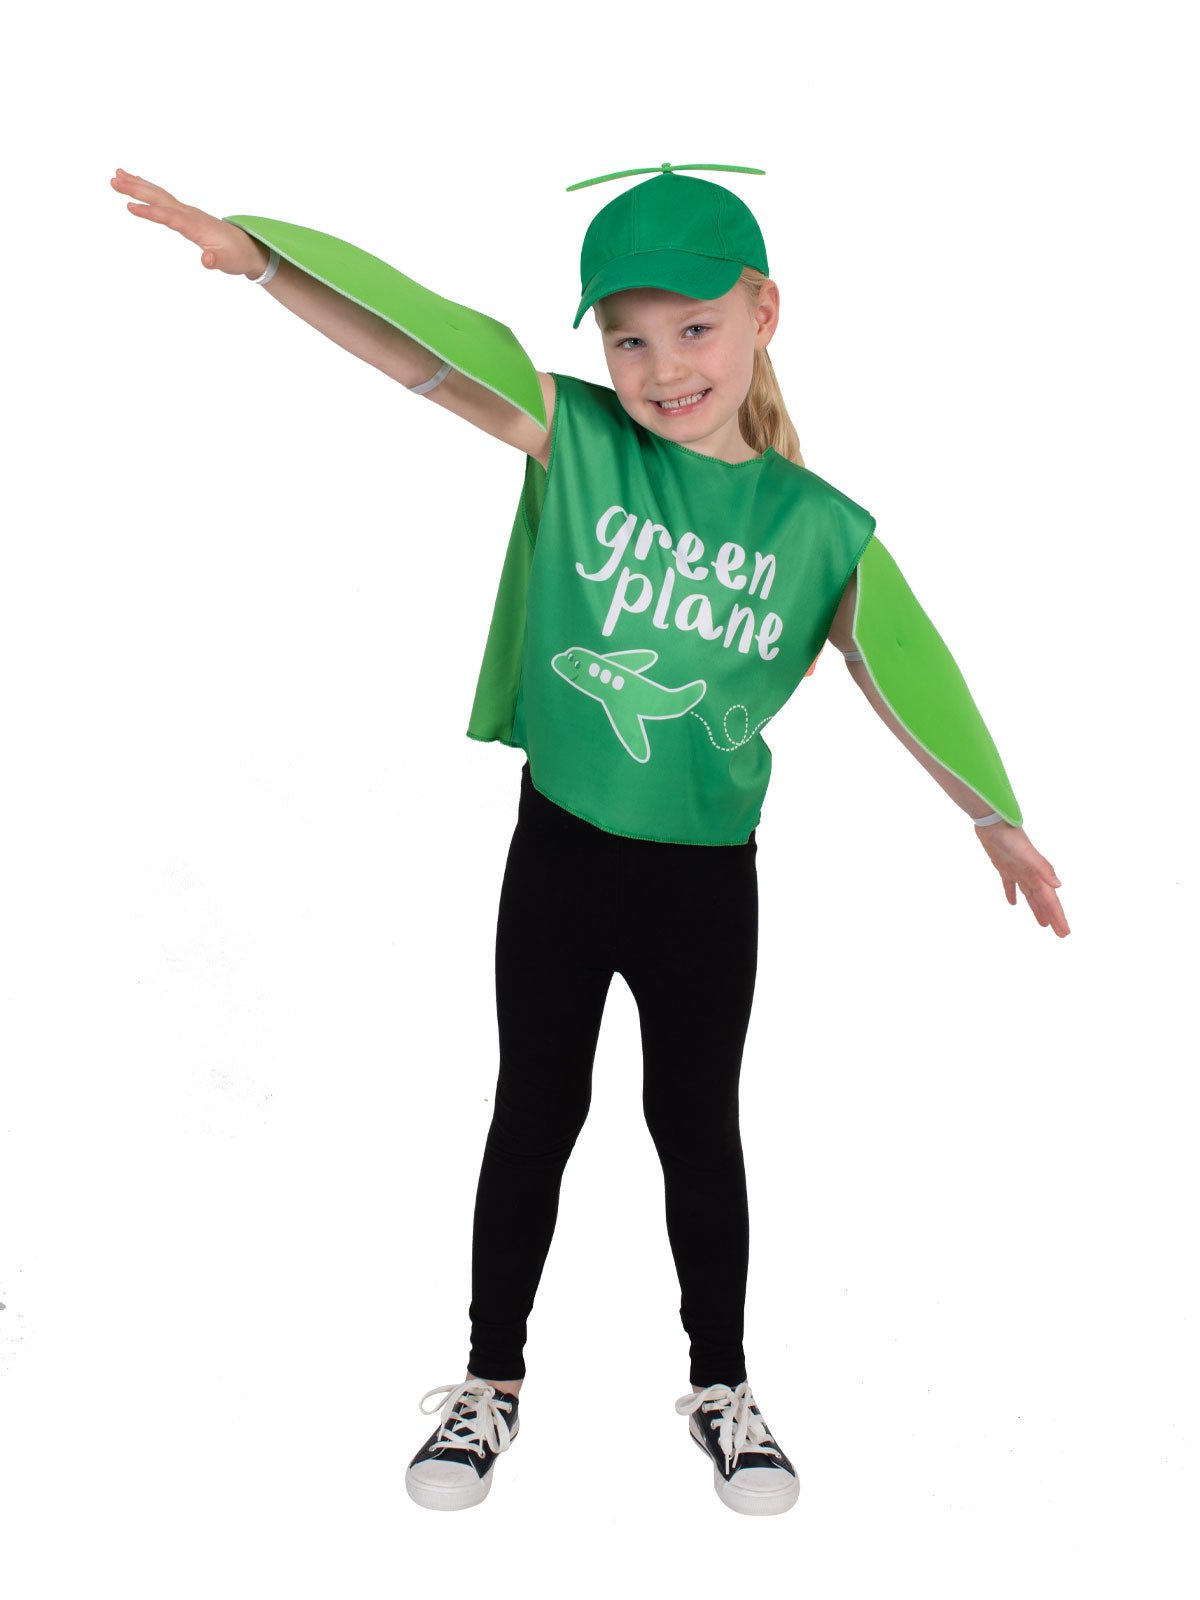 Emma Memma Costume Green Plane costume for Kids 